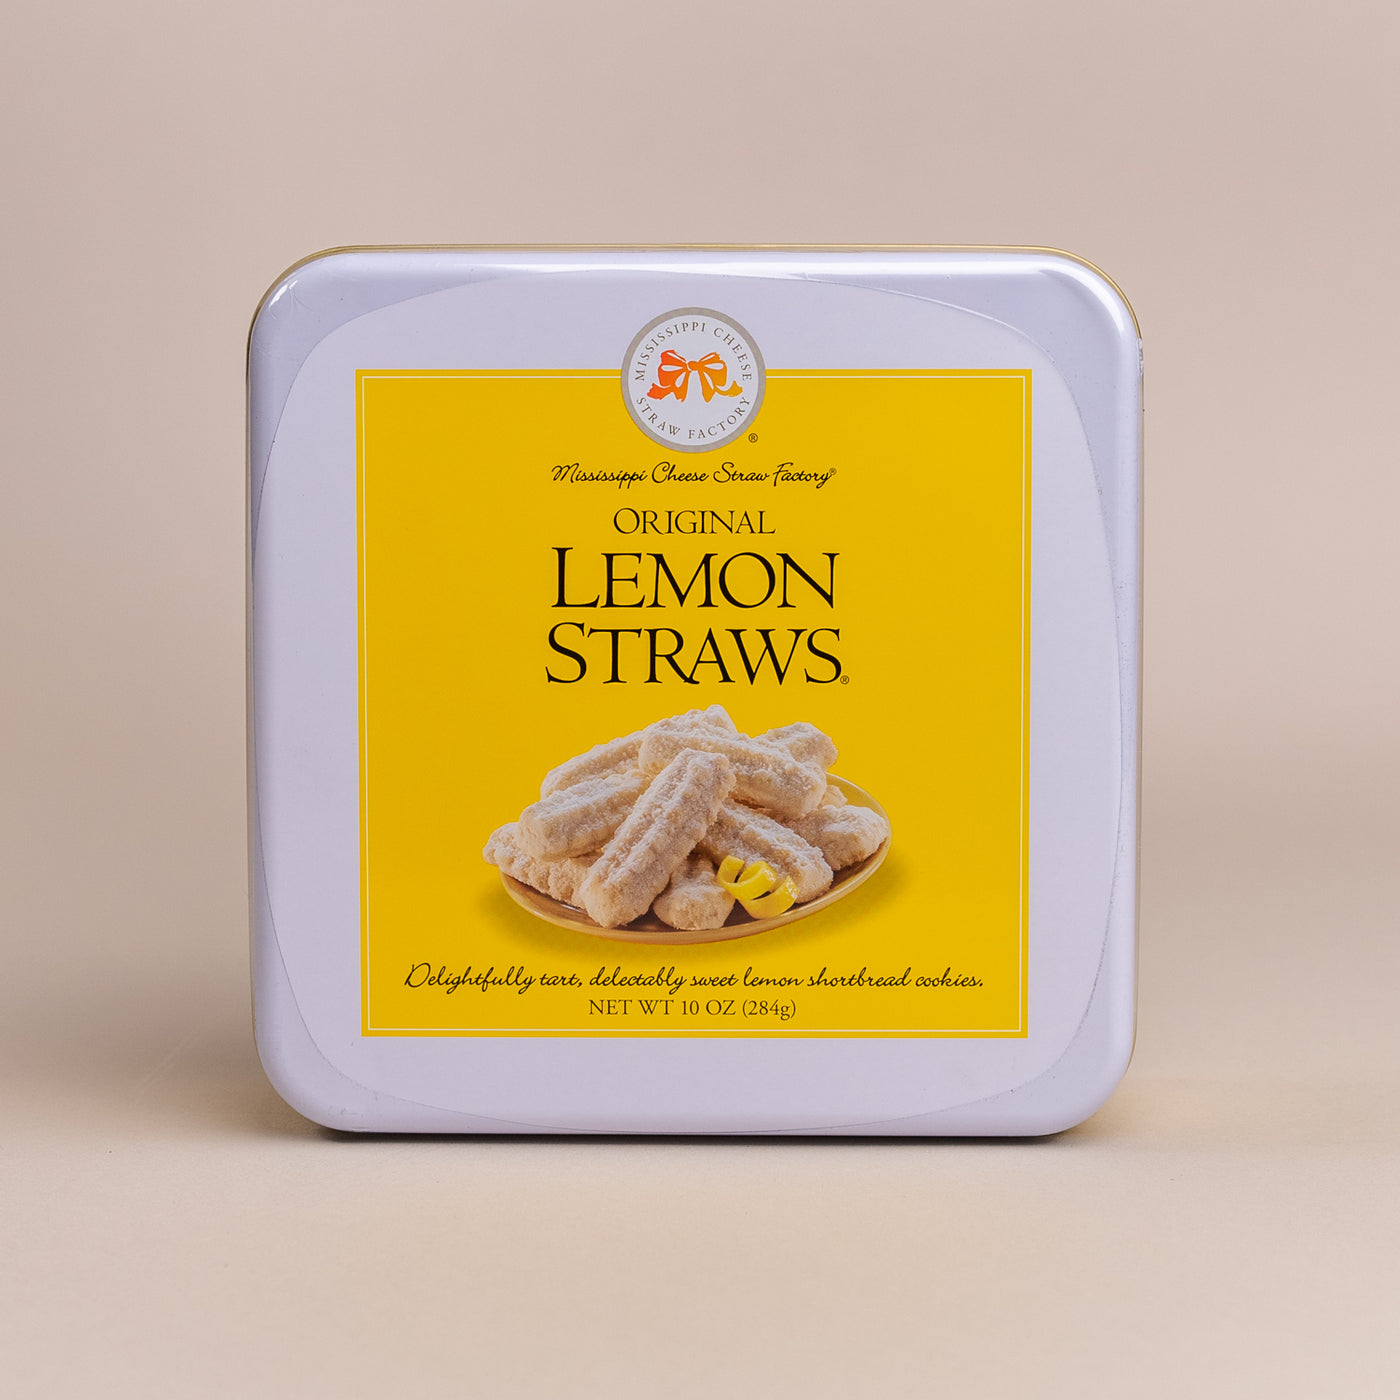 Mississippi Cheese Straw Factory Lemon Straw Tin 10 oz